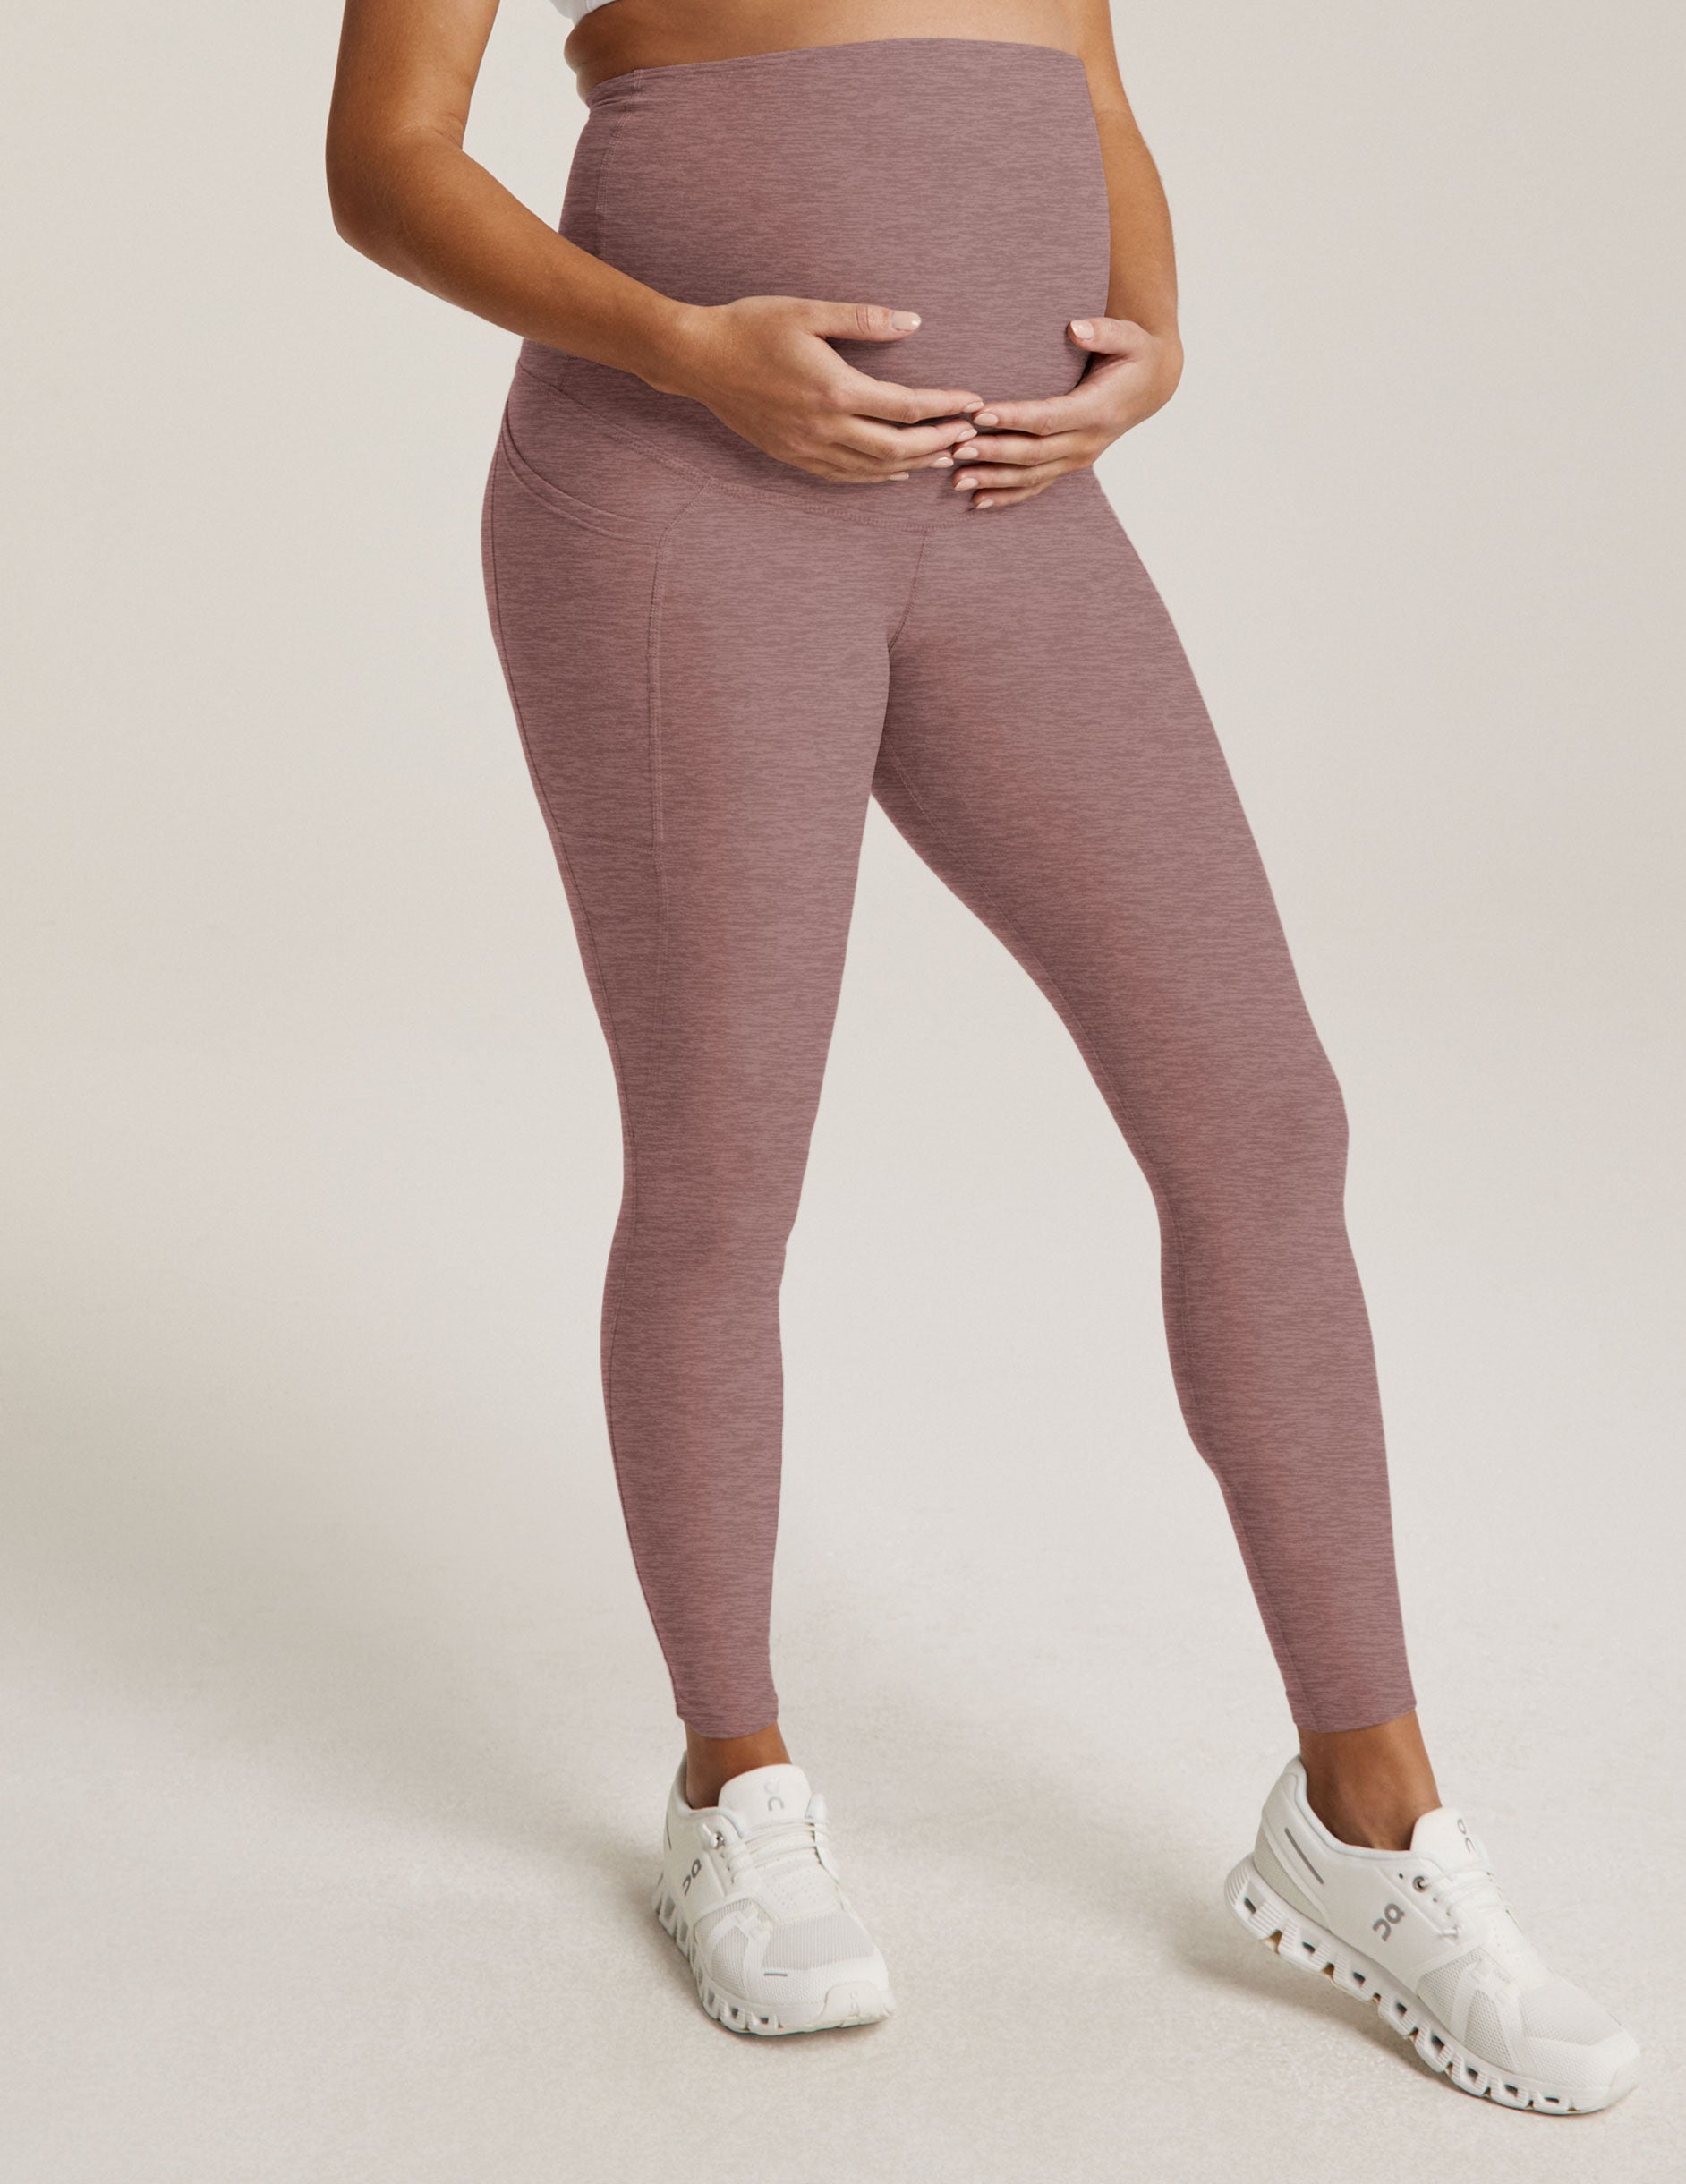 XL-6XL women summer Modal pants thin tight elastic slimming PLUS SIZE  leggings